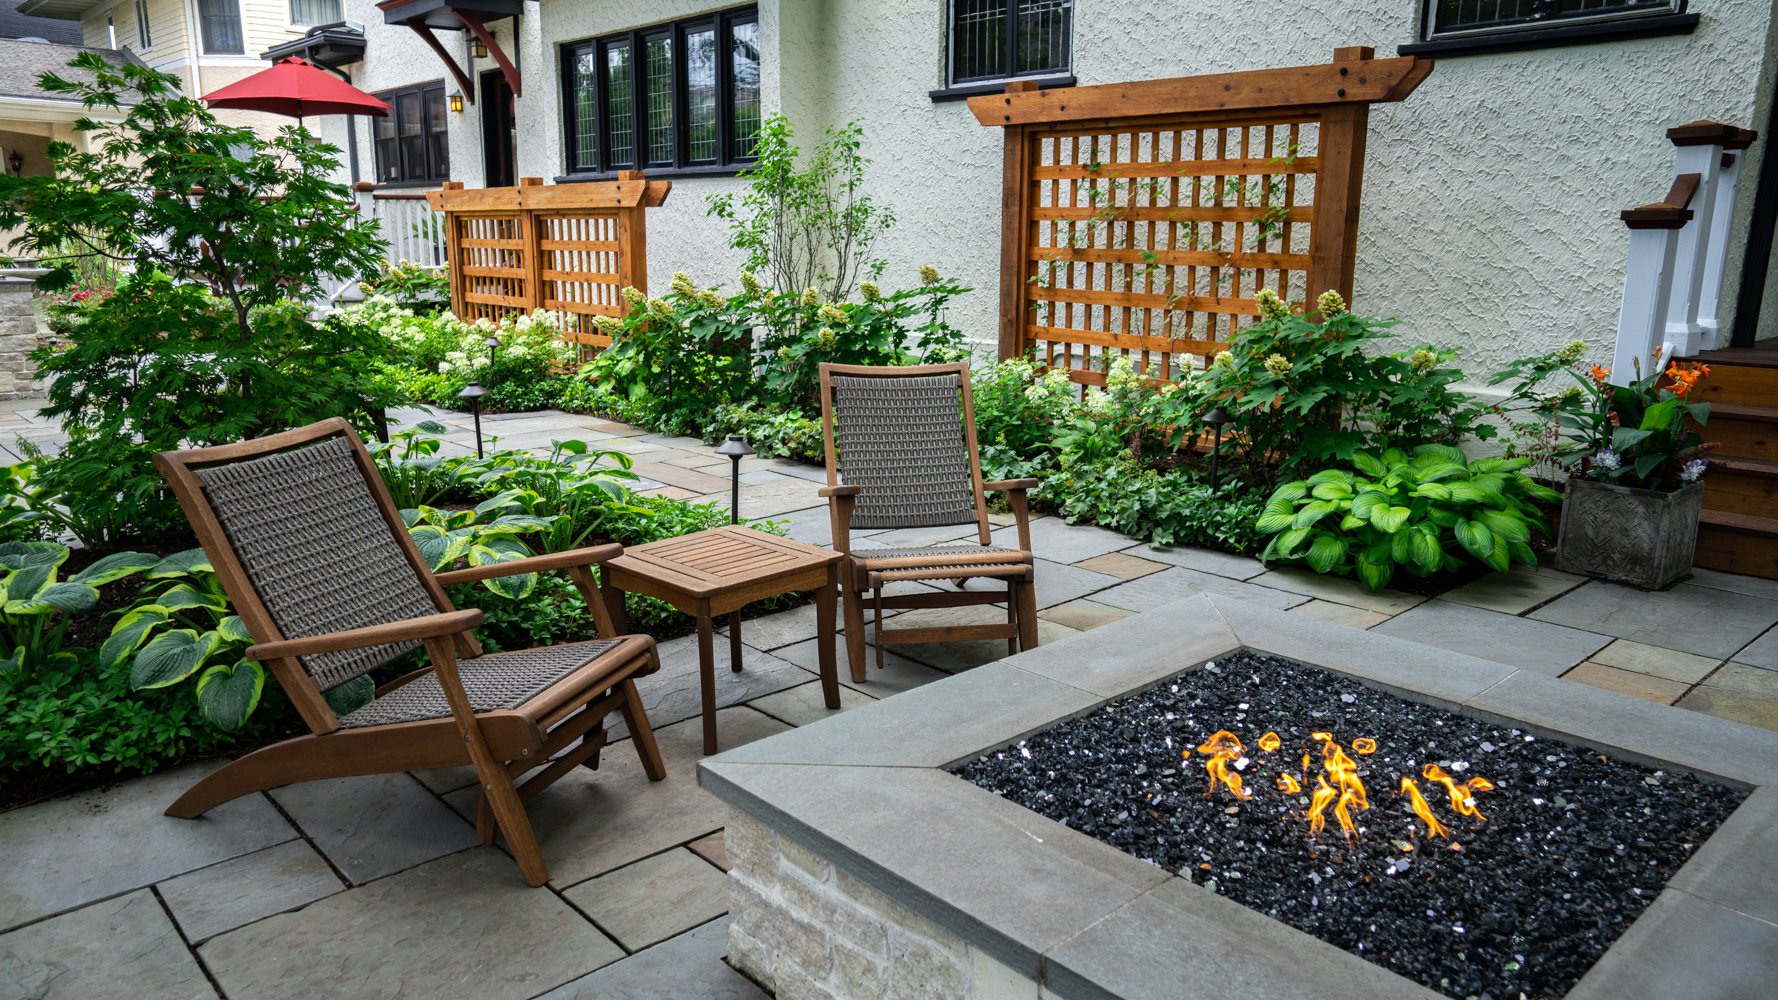 Backyard patio and fire pit